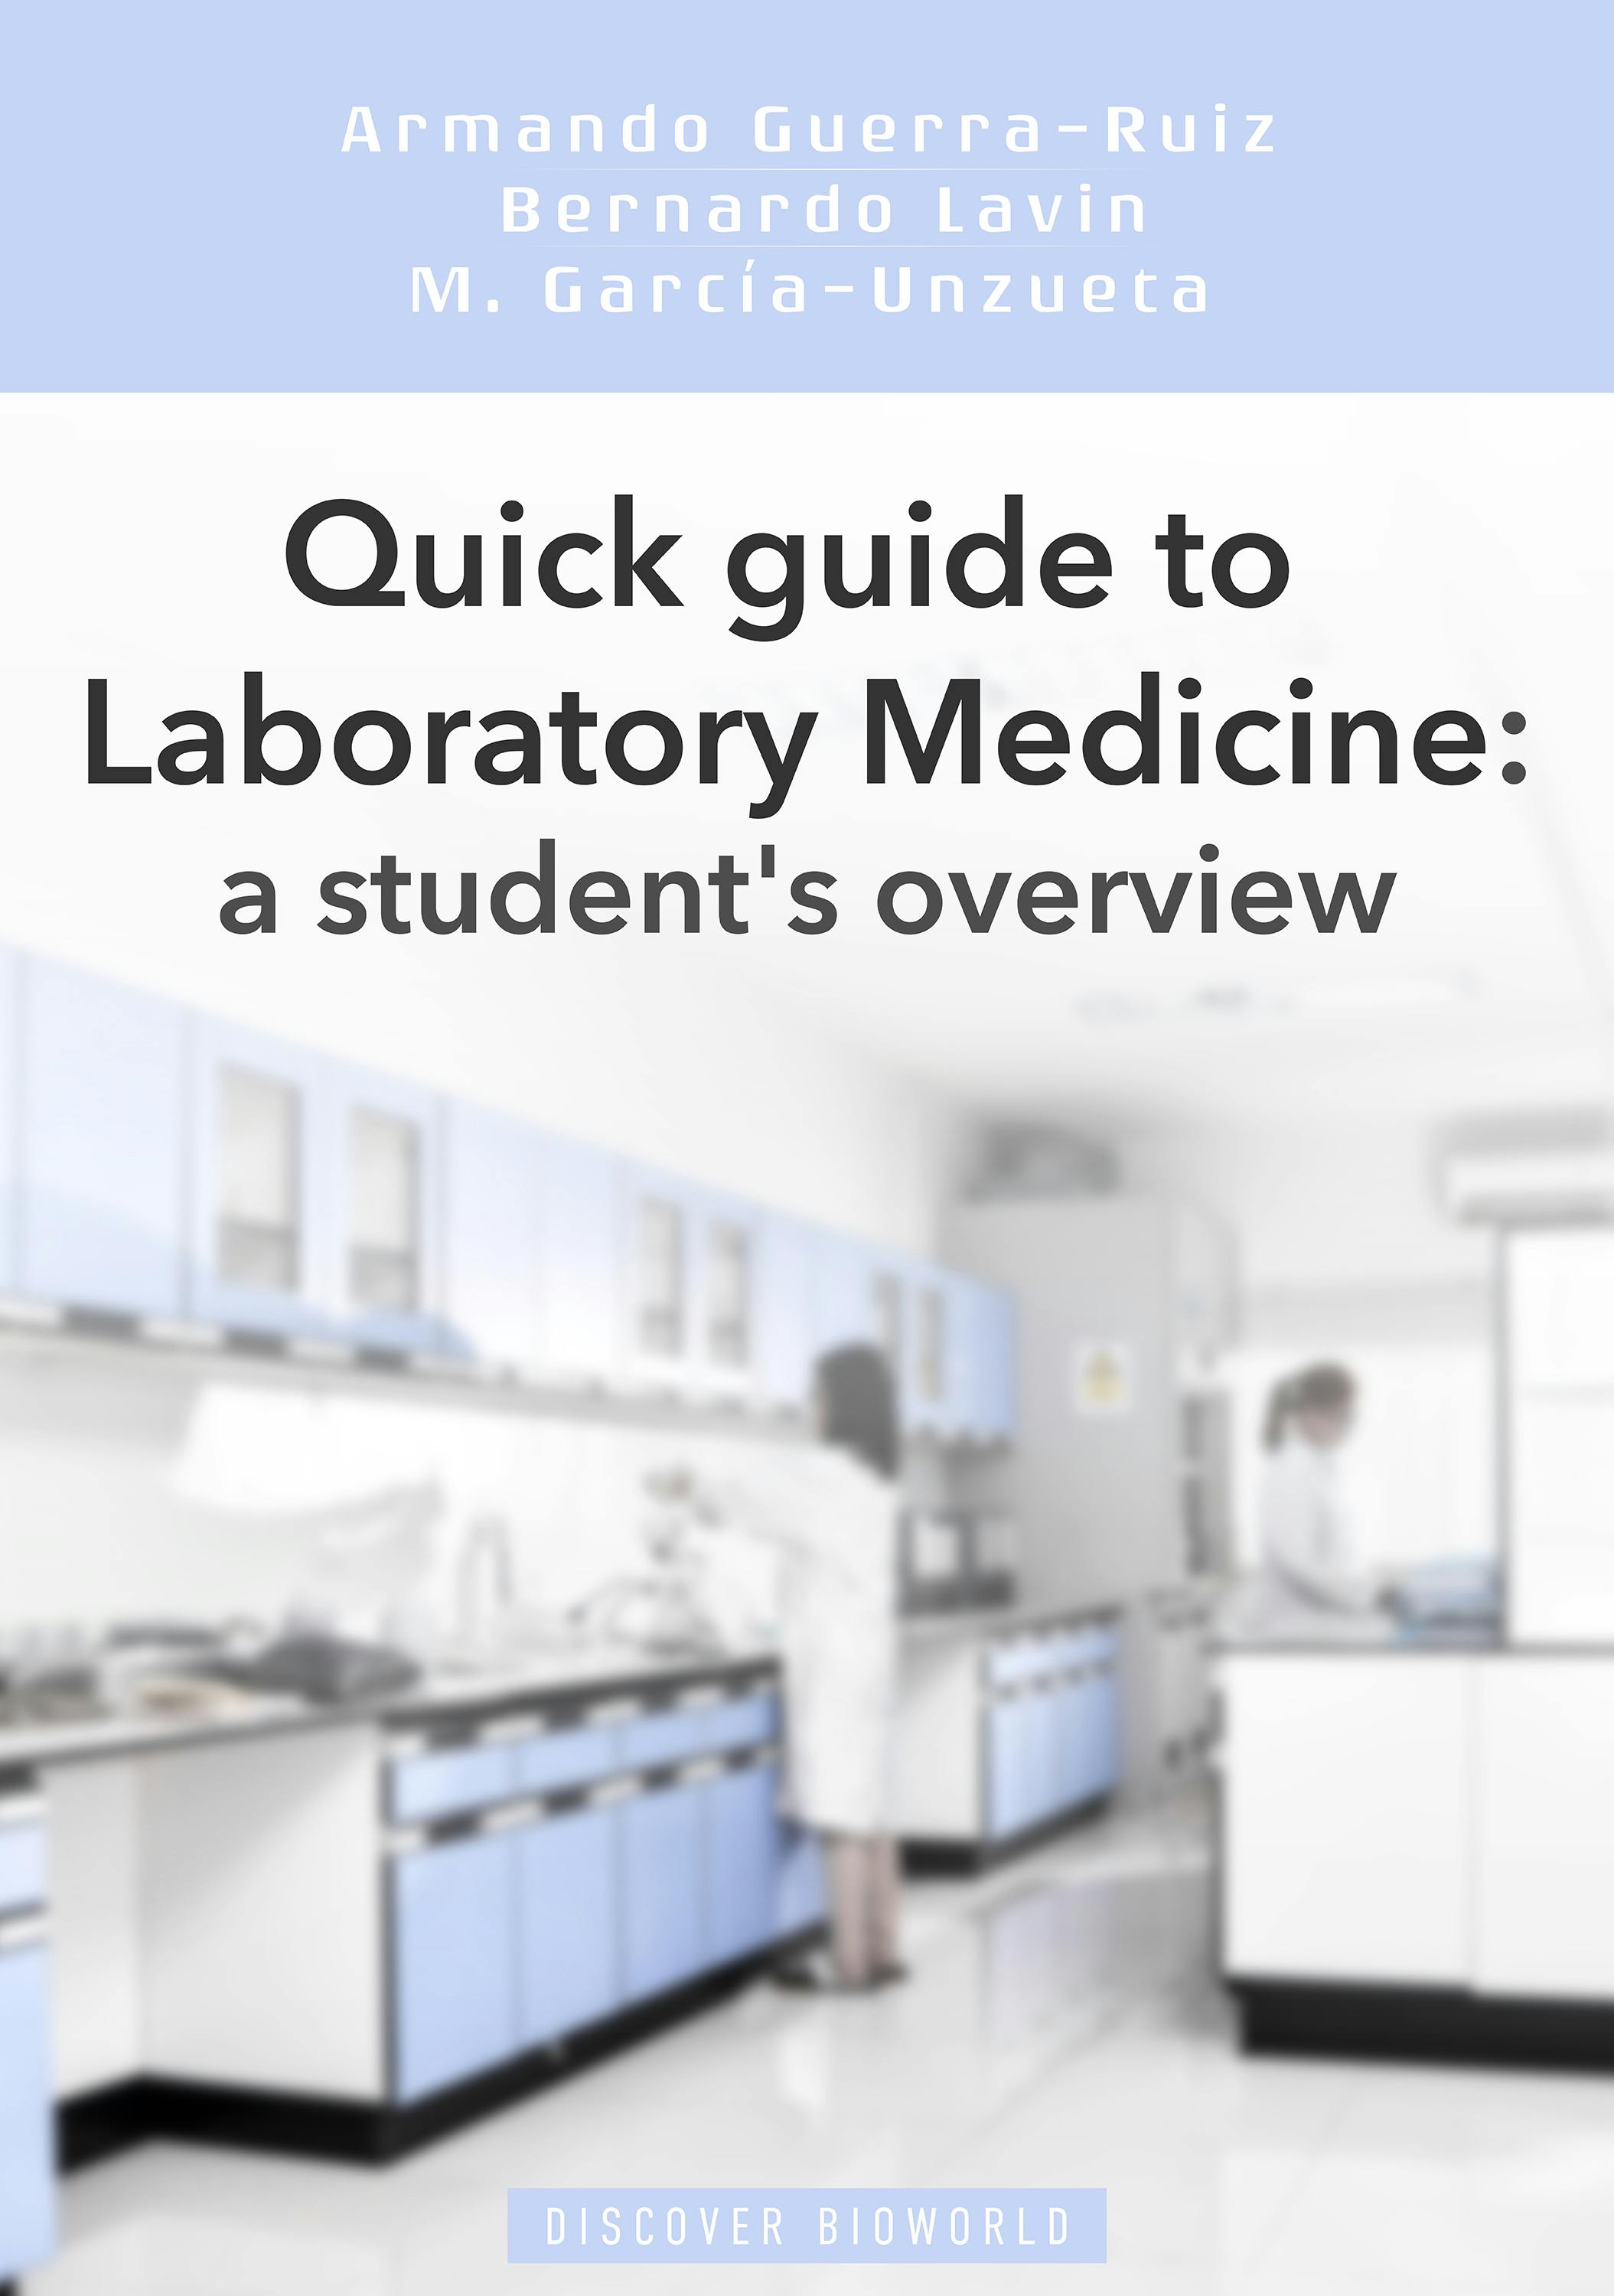 Quick guide to Laboratory Medicine: a student's overview - Mayte Garcia Unzueta, Armando Guerra-Ruiz, Bernardo Lavin